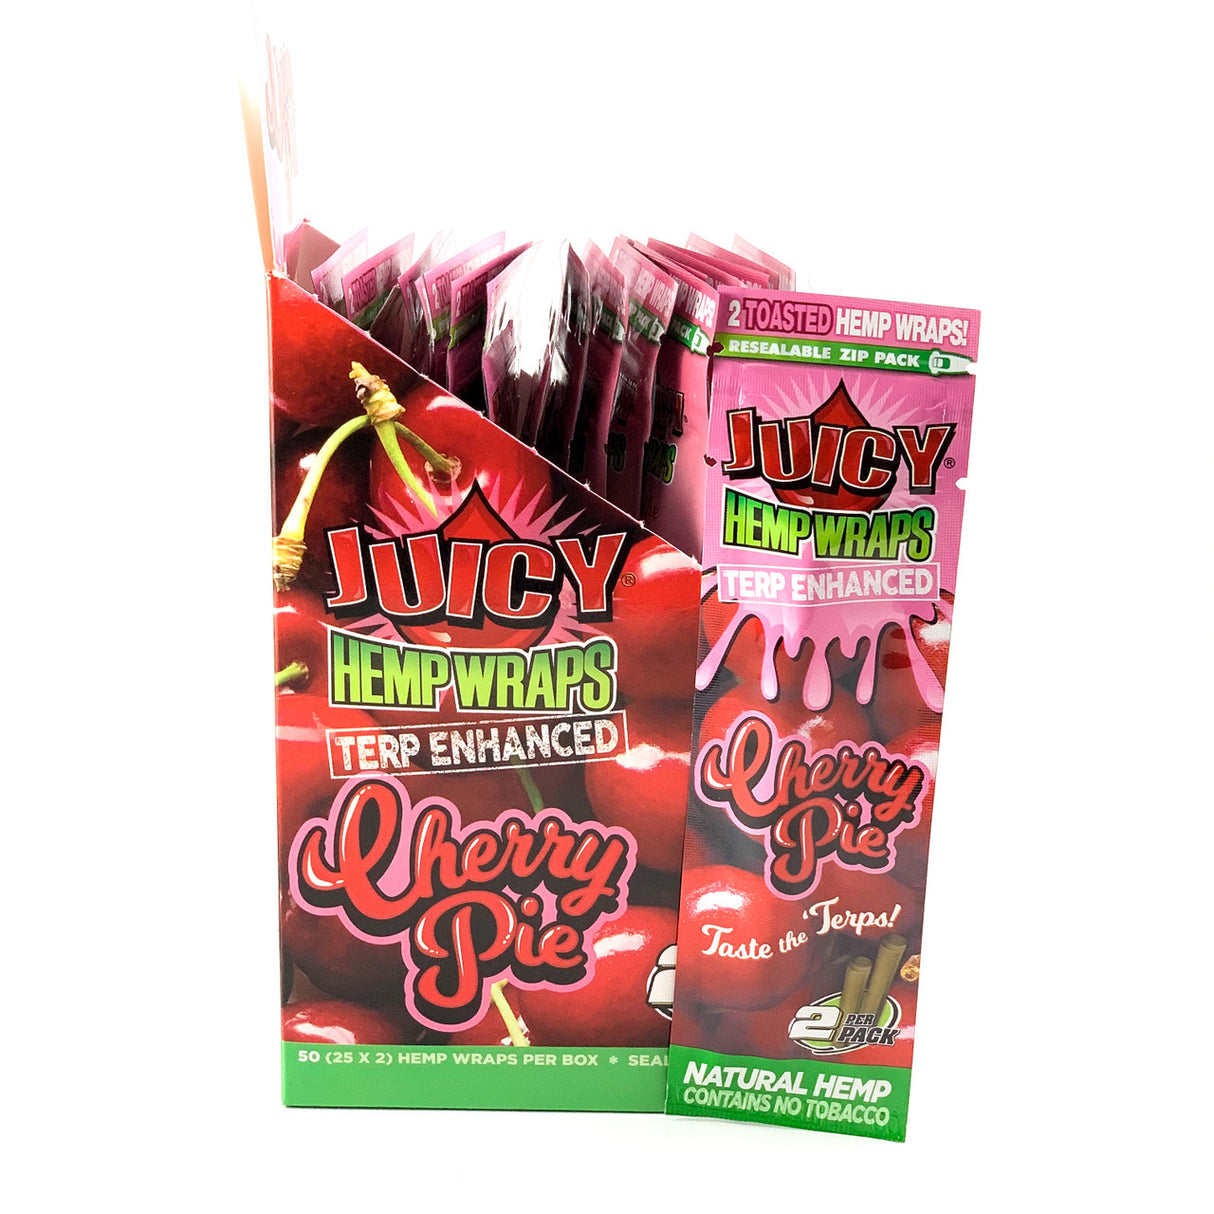 Juicy Hemp Wraps Terp Enhanced 2pk - Cherry Pie